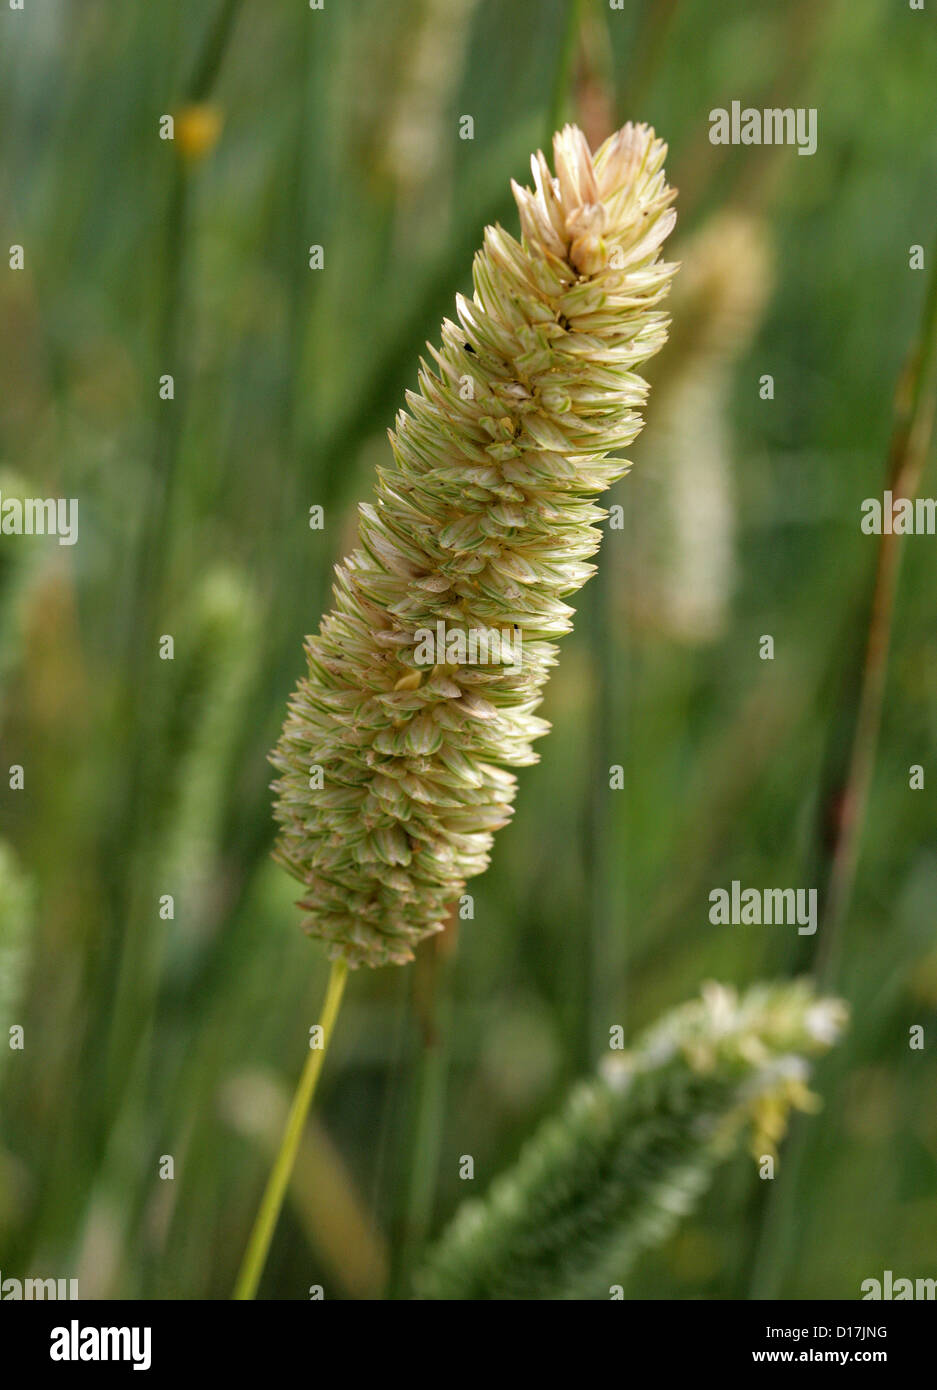 Bulbous Canary Grass, Phalaris aquatica, Poaceae. S. Europe, Australia, Worldwide. Stock Photo